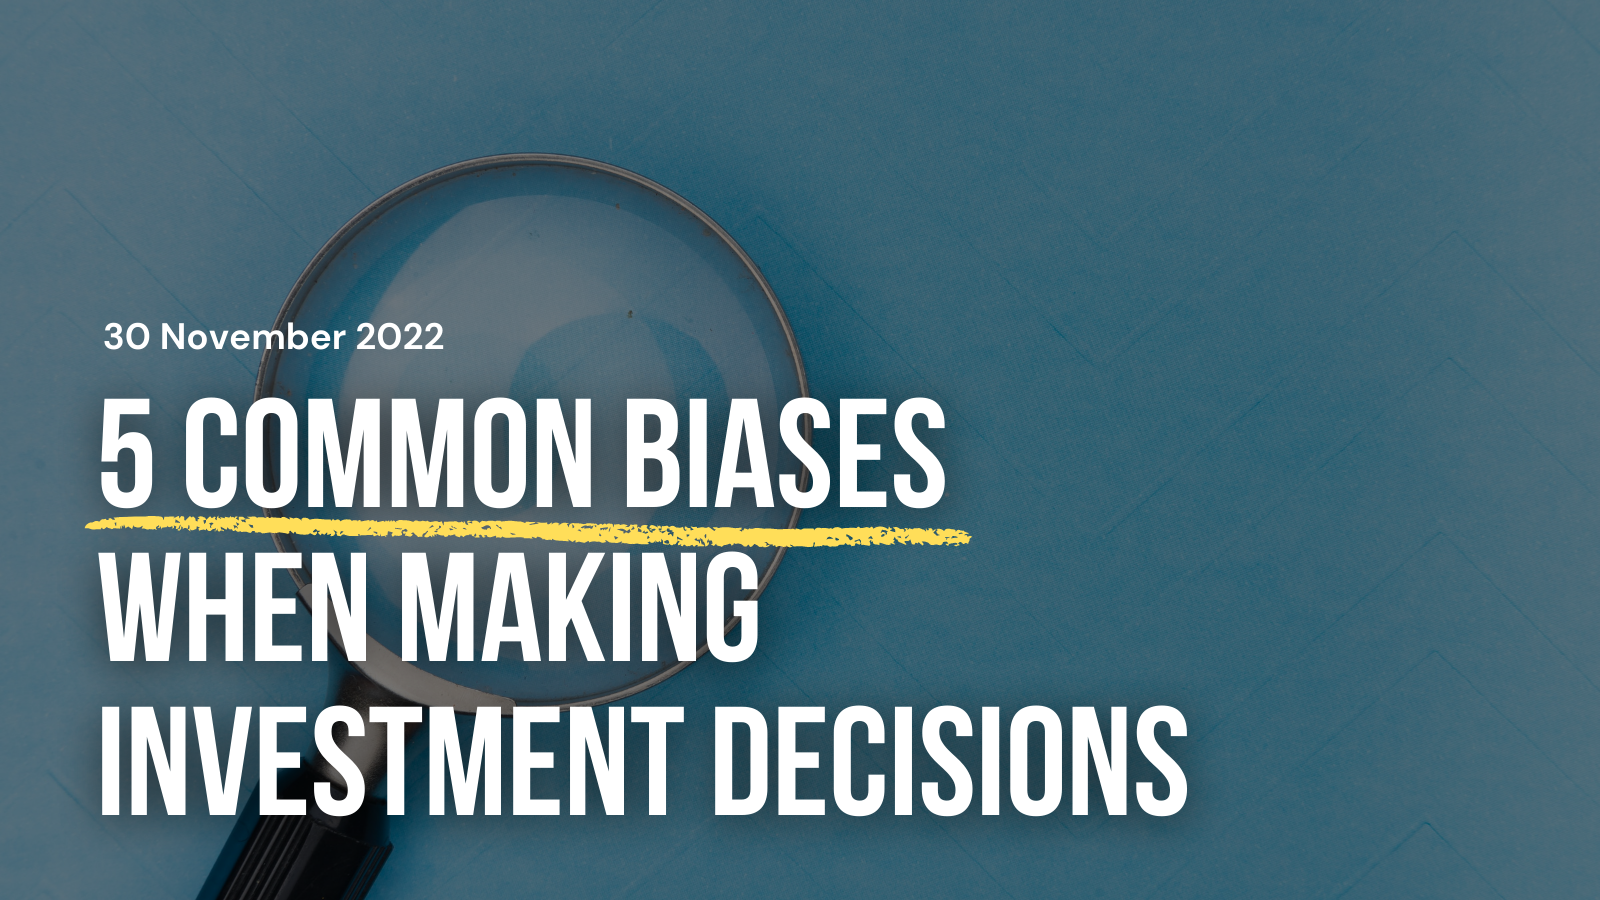 35. common biases investment decisions